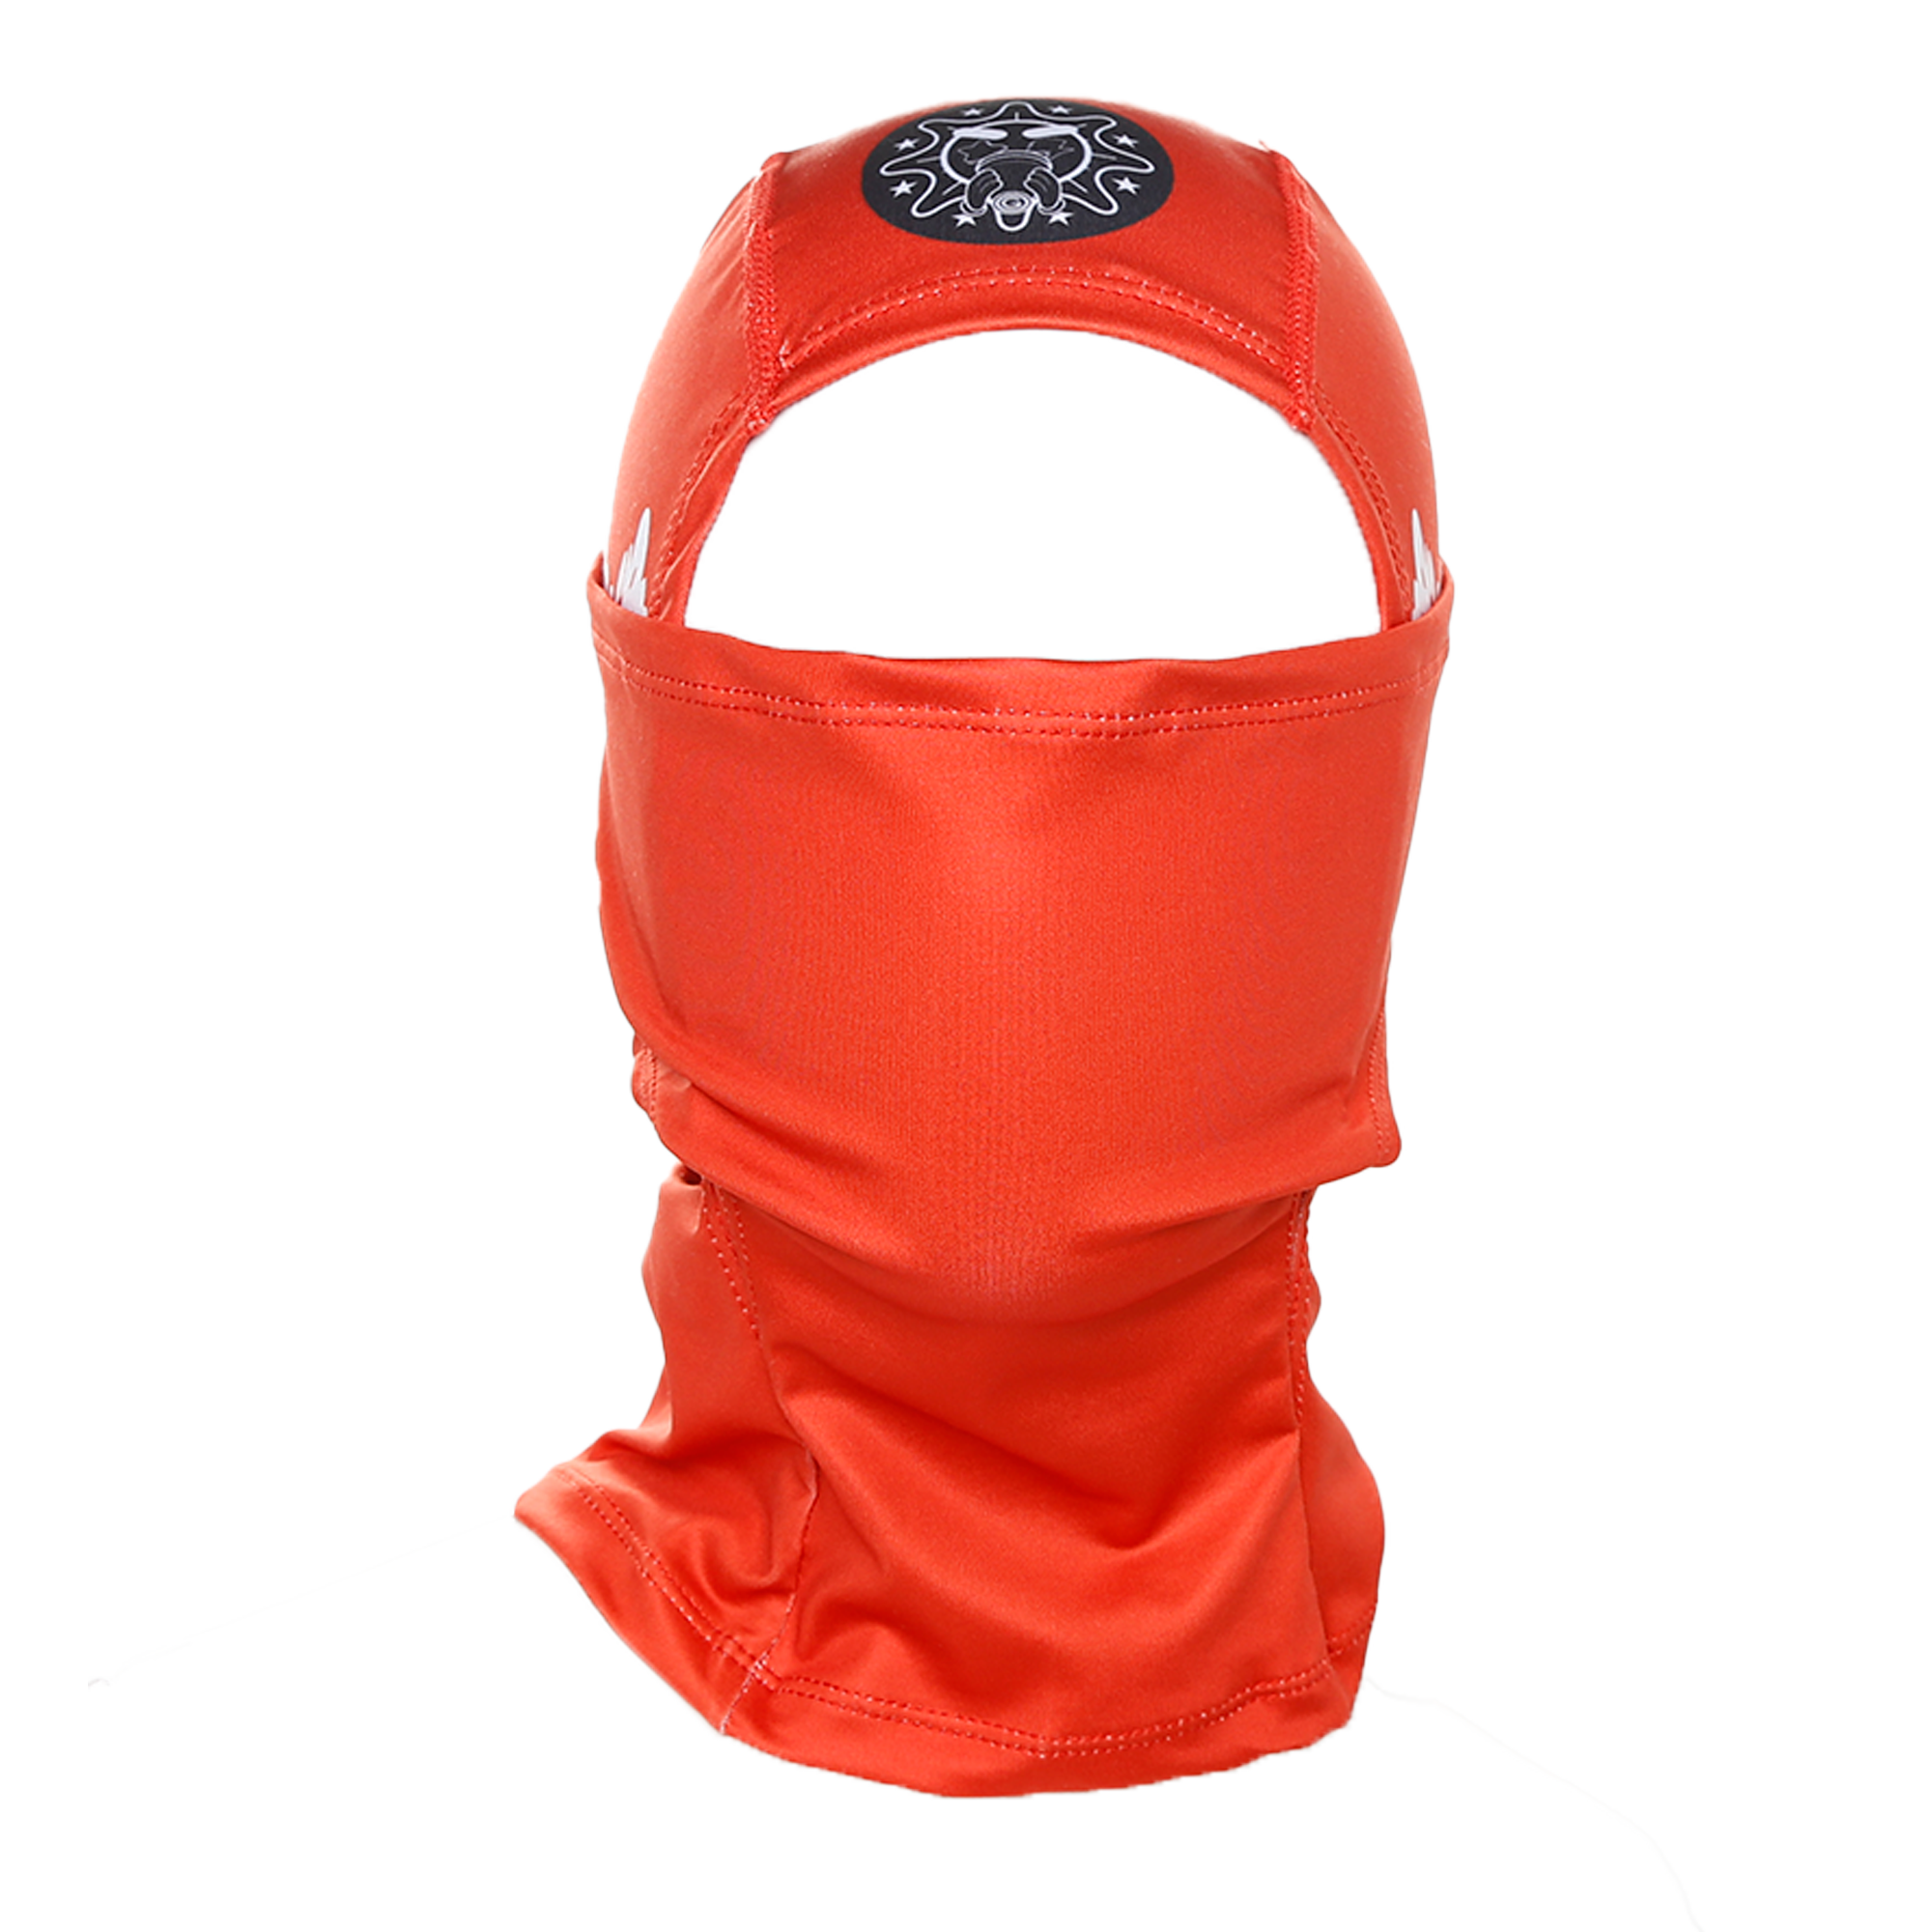 Glo Man Balaclava Ski Mask (Red)